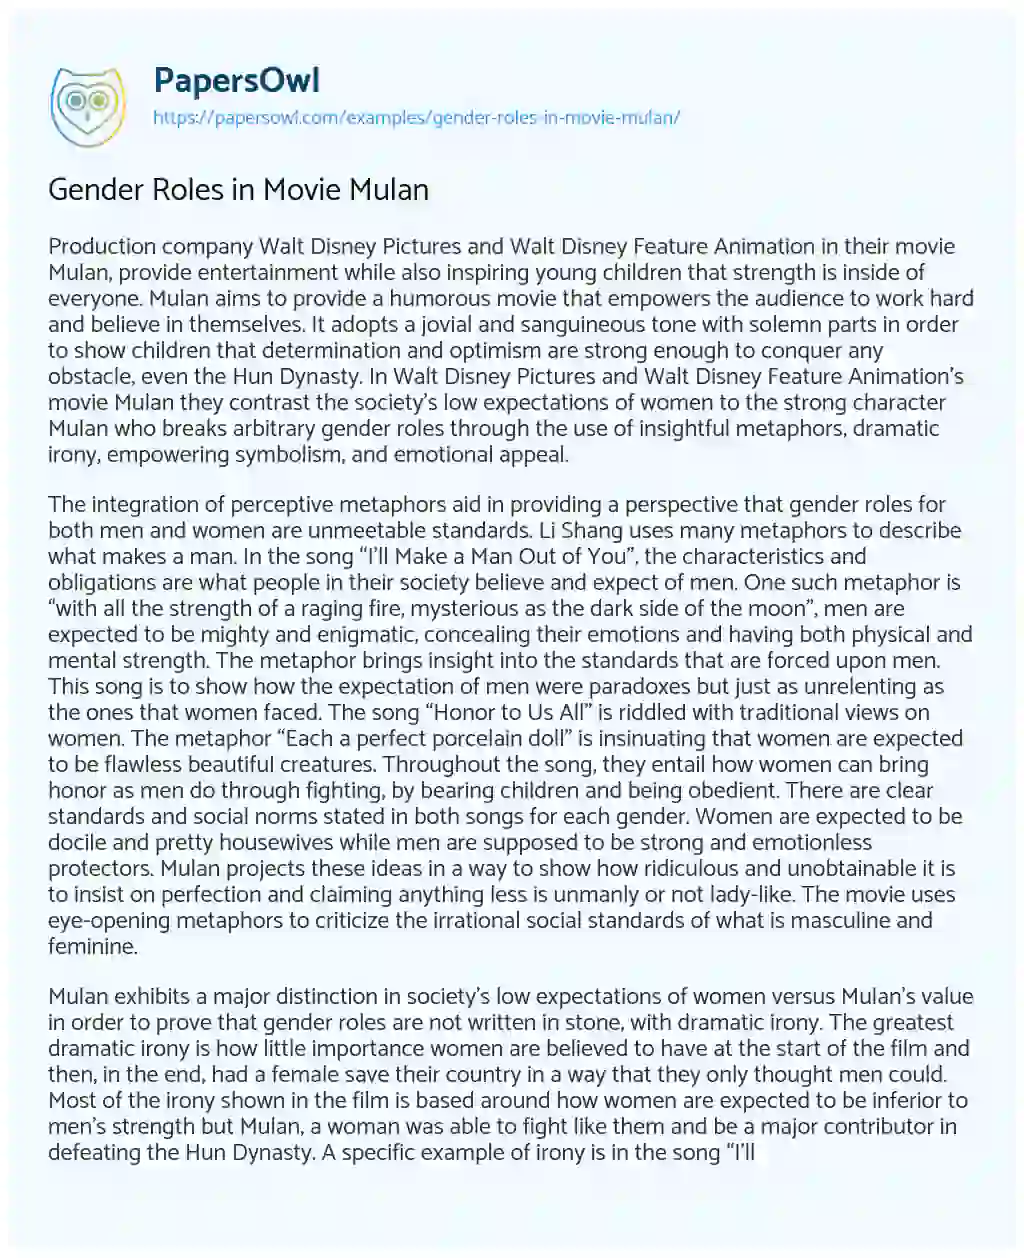 Essay on Gender Roles in Movie Mulan